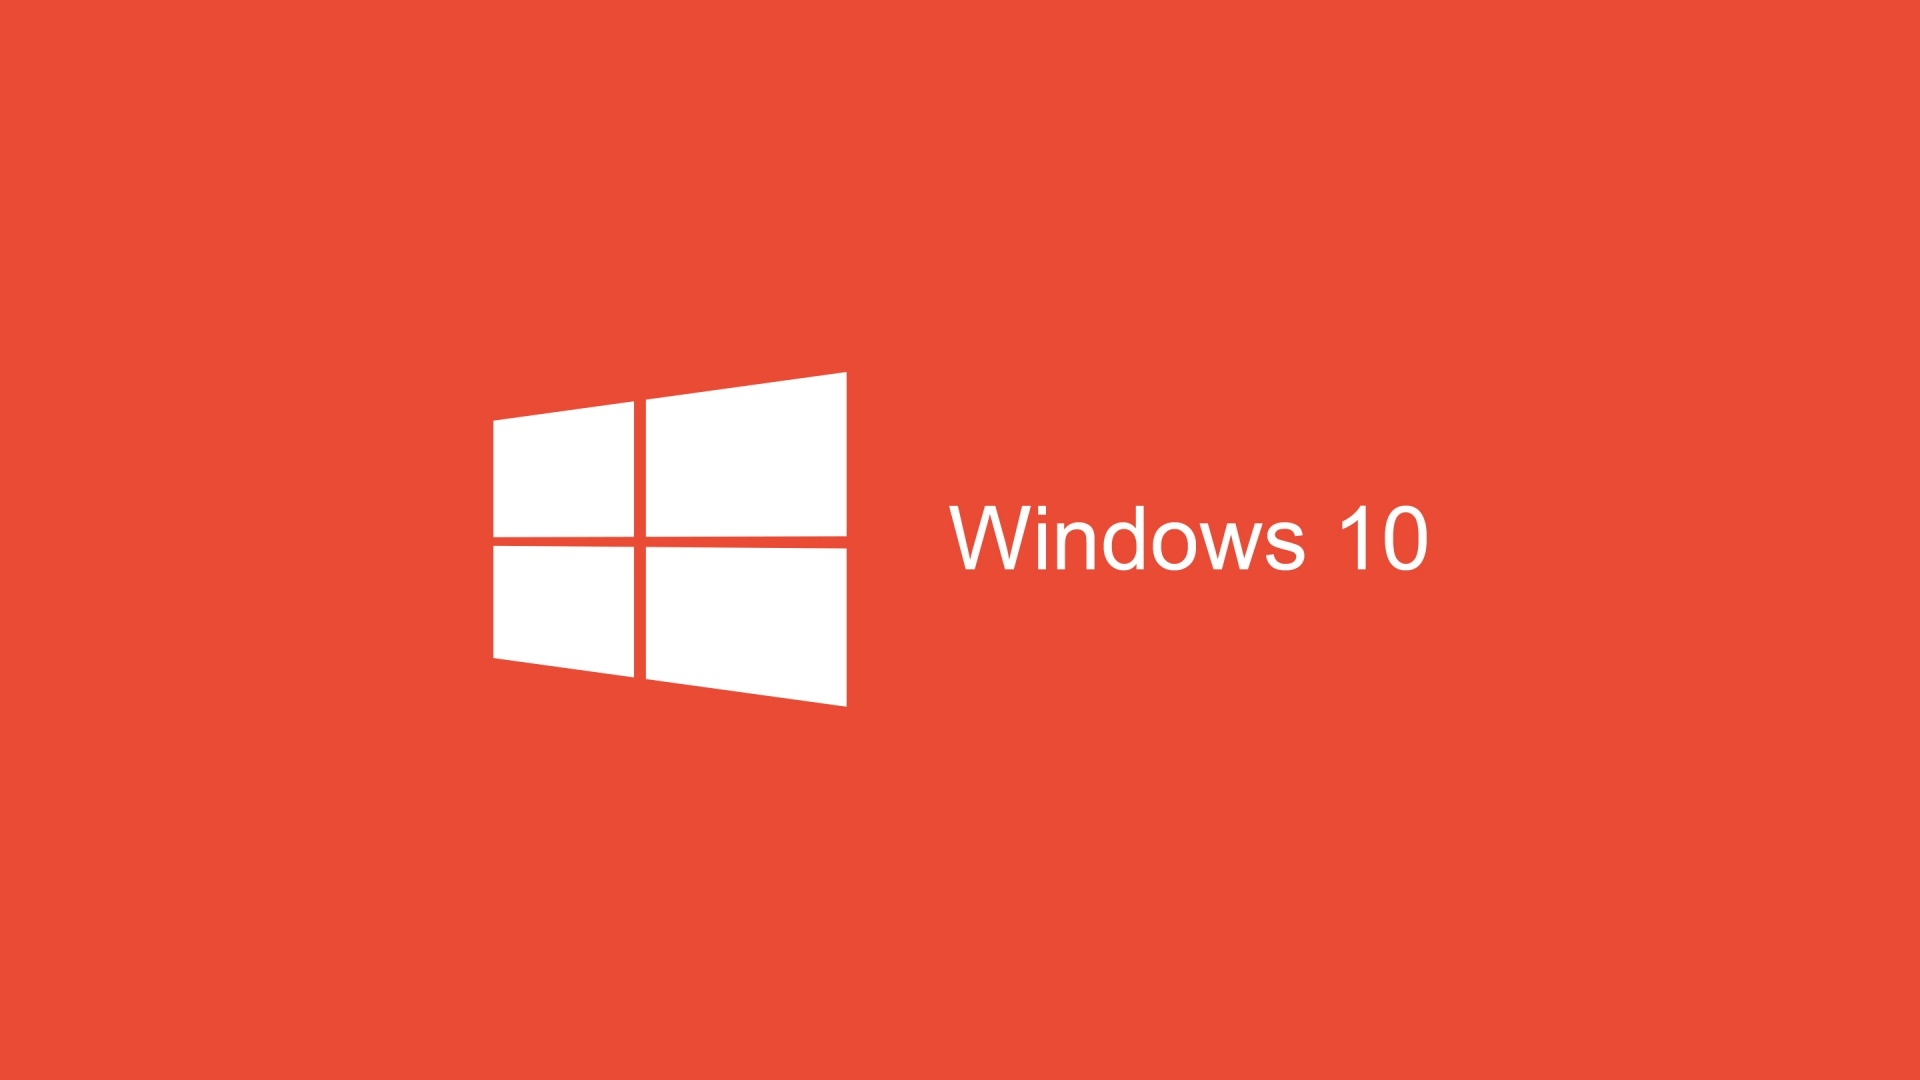 windows_10_2015_red_background-wallpaper-1920x1080.jpg